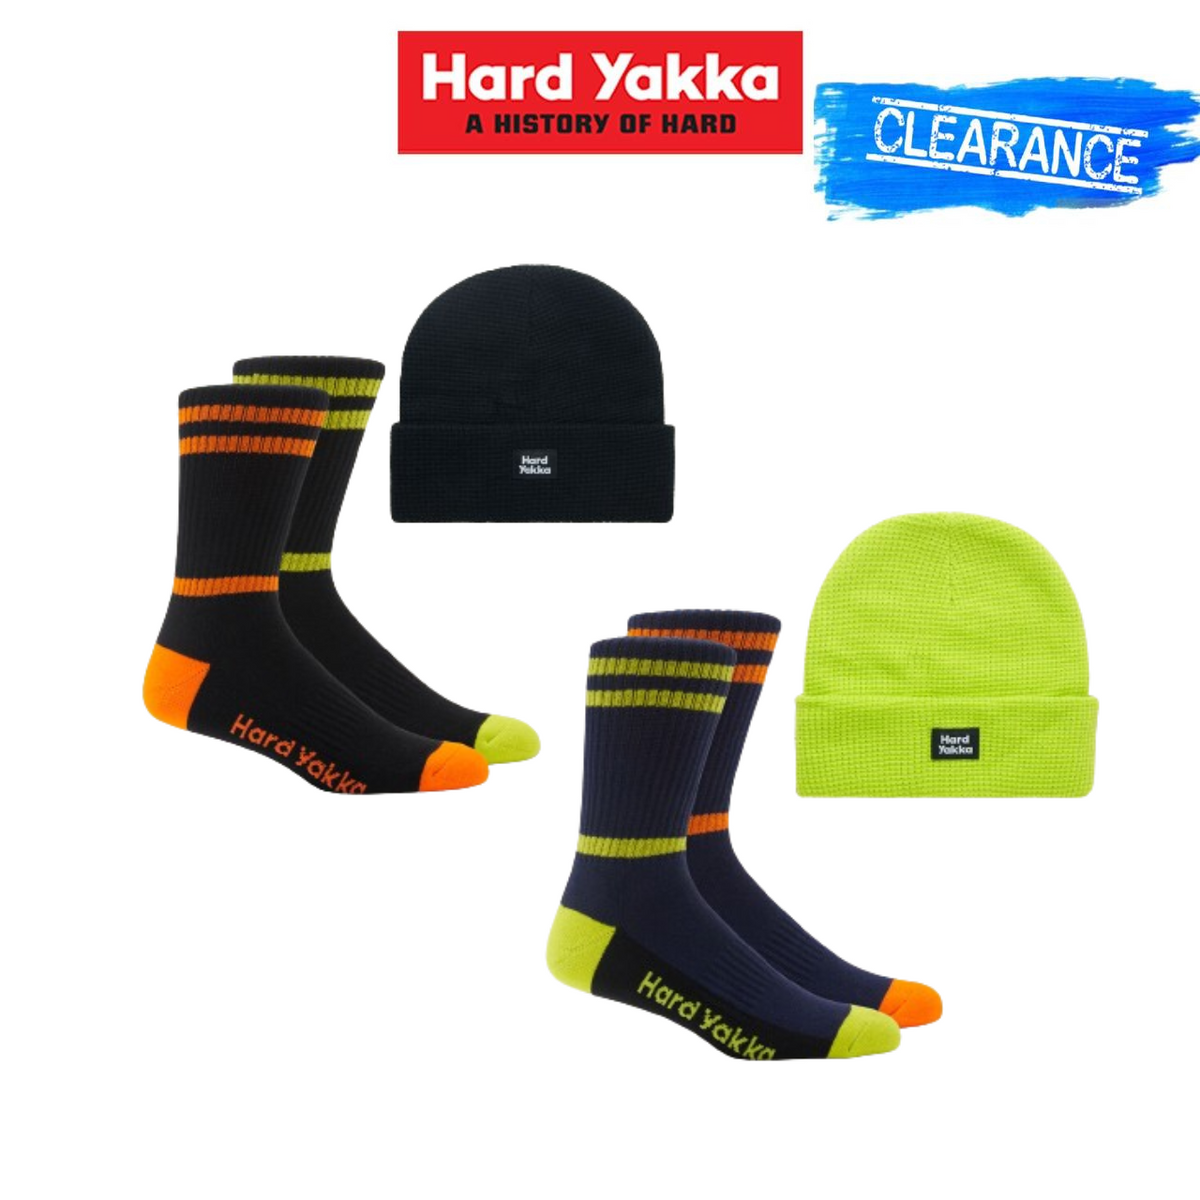 Clearance! Hard Yakka Unisex 2 Pack Crew Sock Waffle Knit Beanie Bundle Y20110